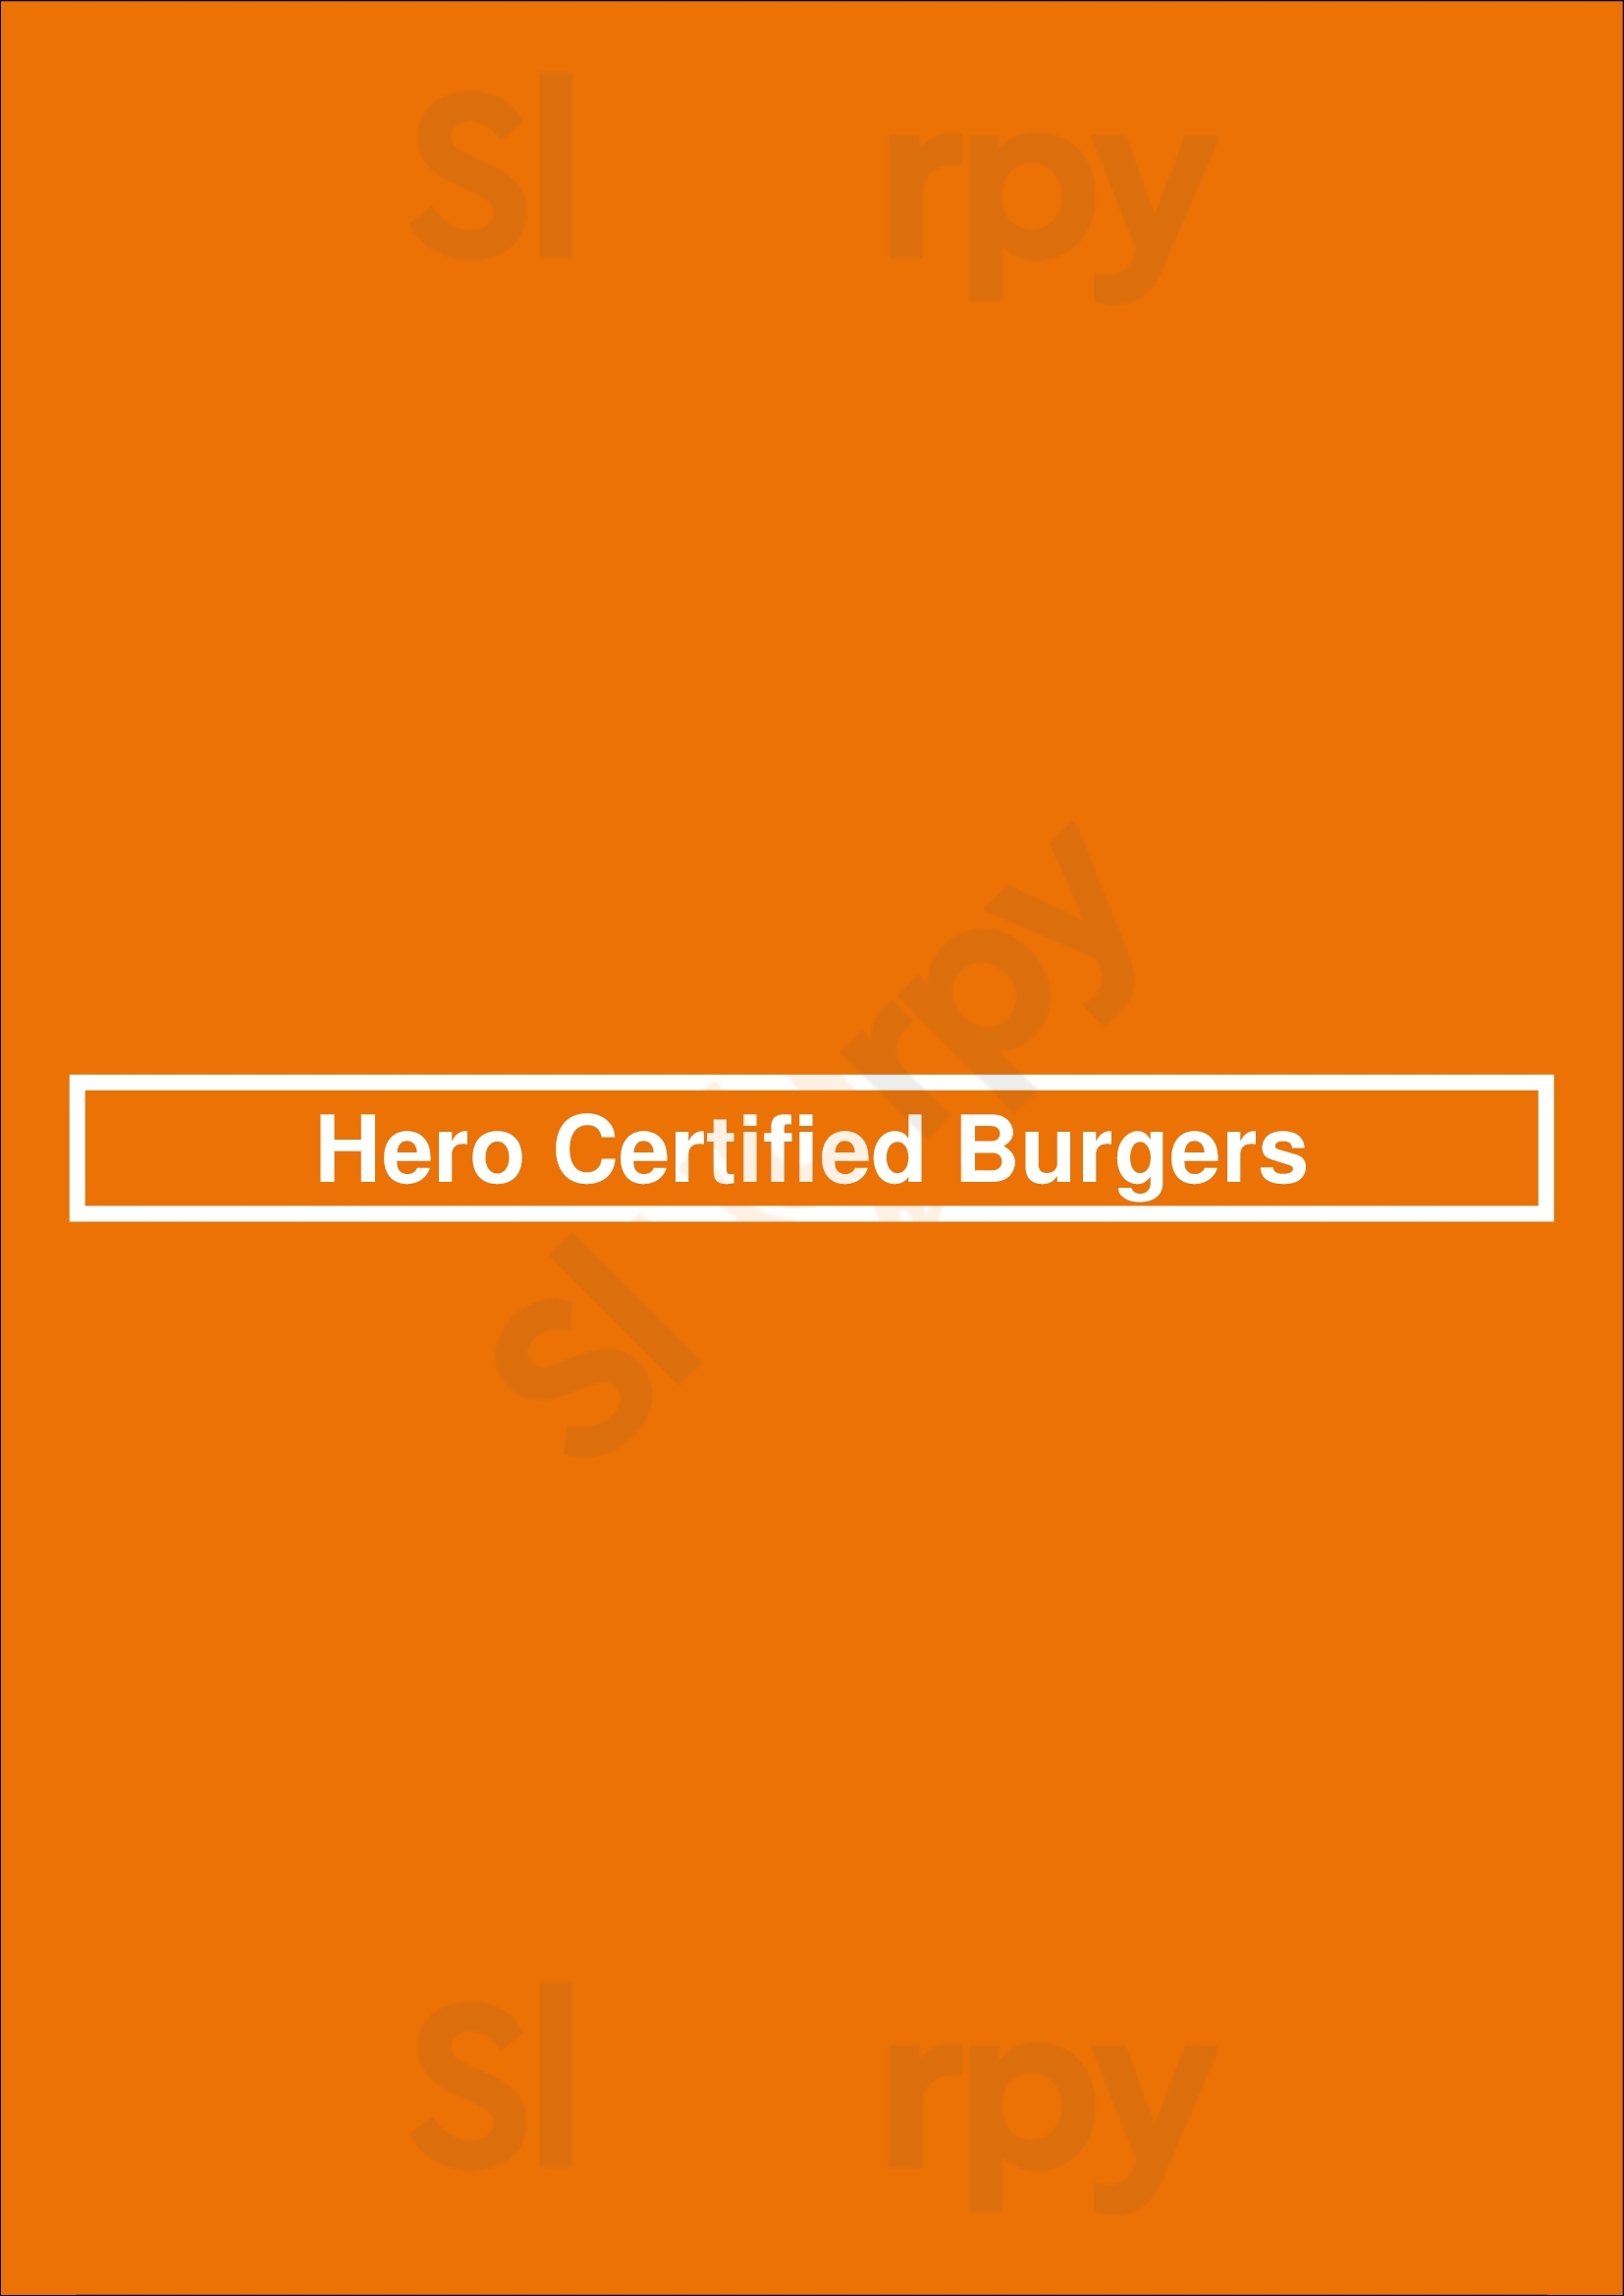 Hero Certified Burgers Niagara-on-the-Lake Menu - 1